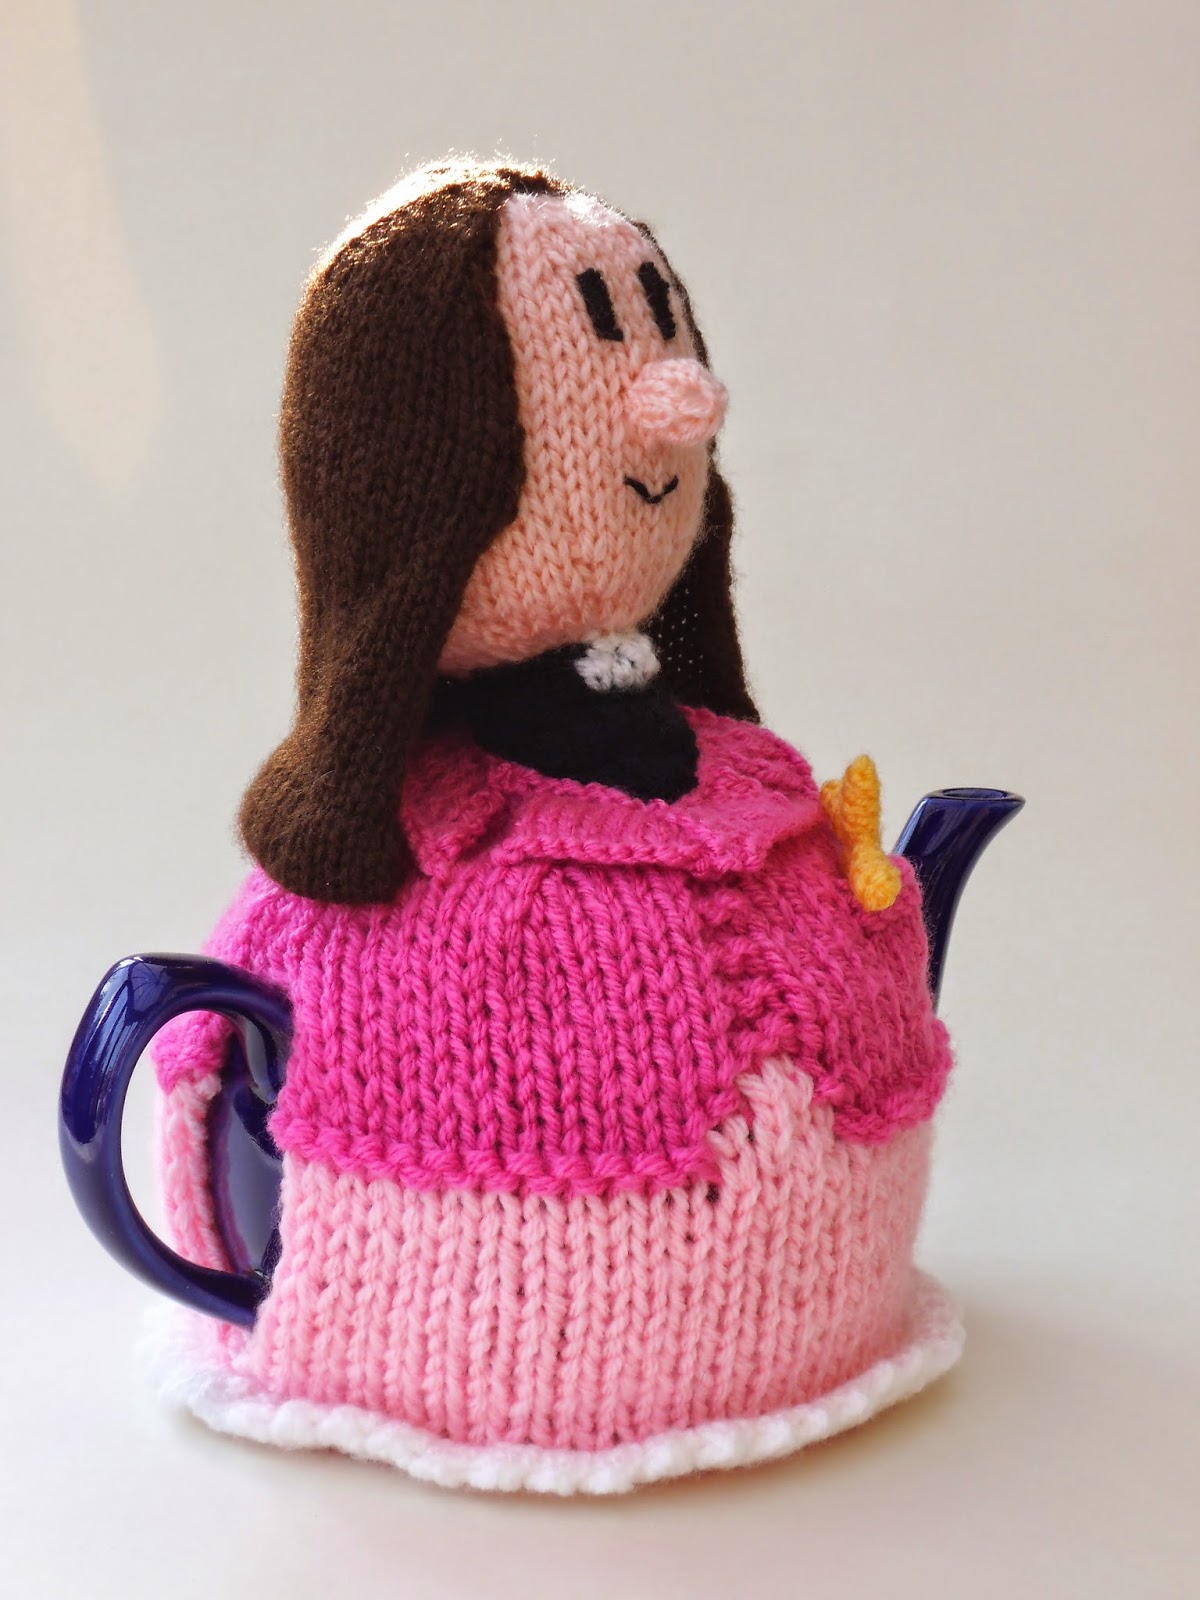 Lady Vicar knitting pattern